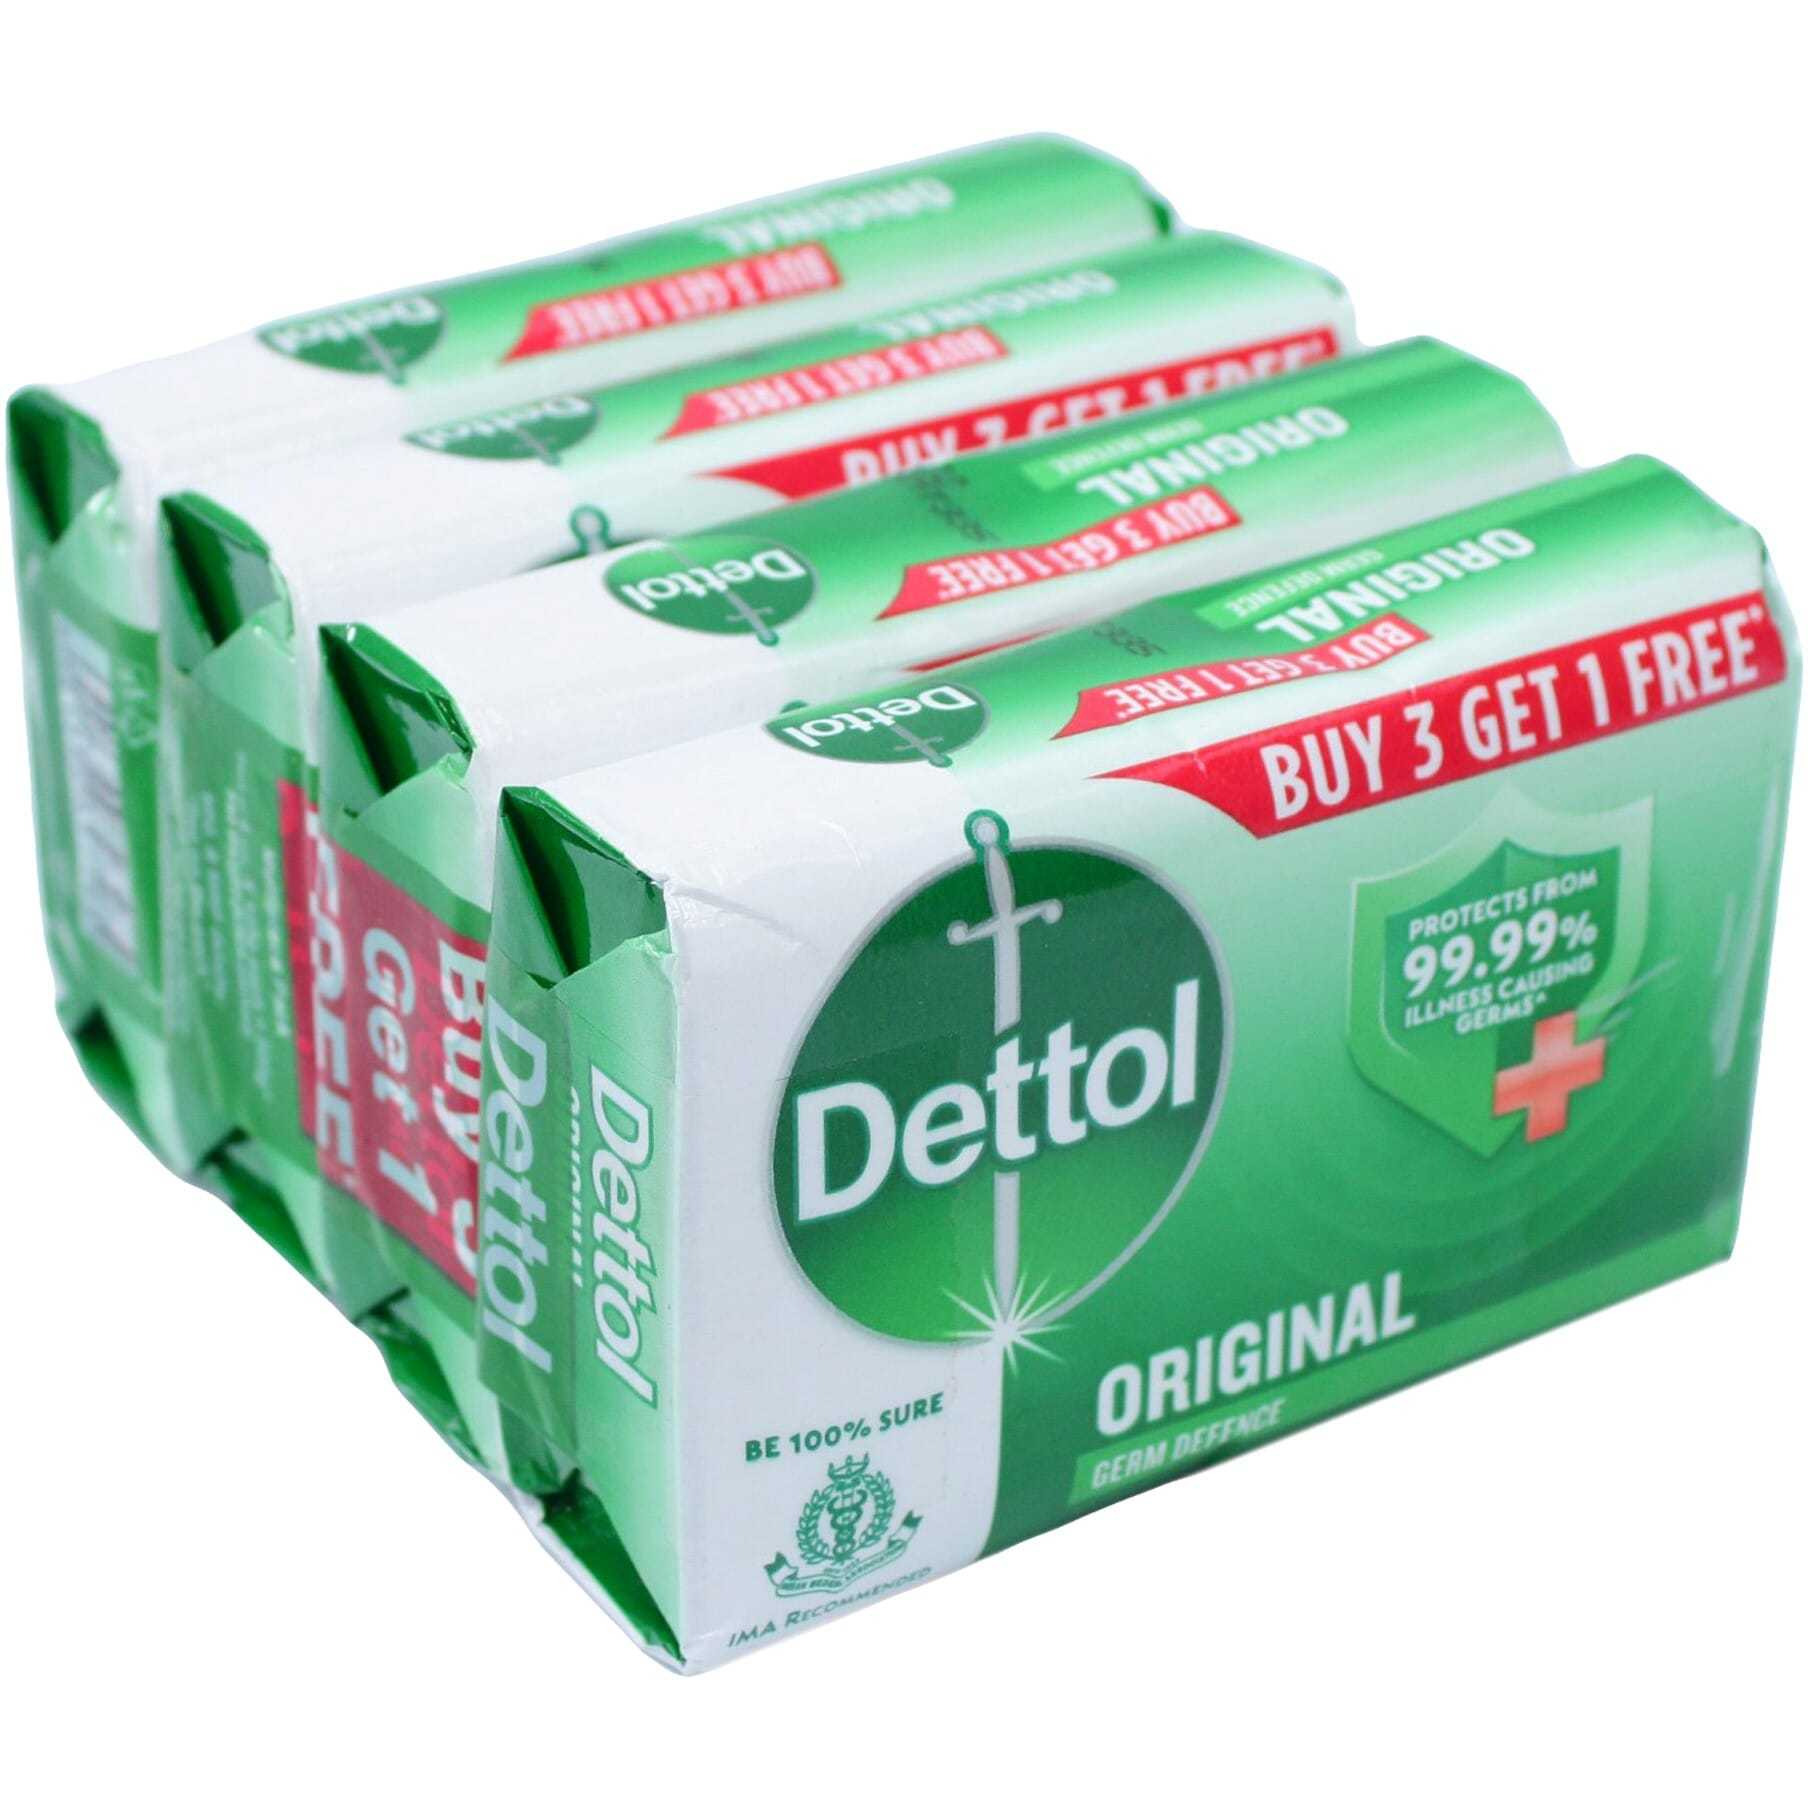 Dettol 4 Pack Soap [Buy 3 Get 1 Free] - 125 Gm each (5 Oz)